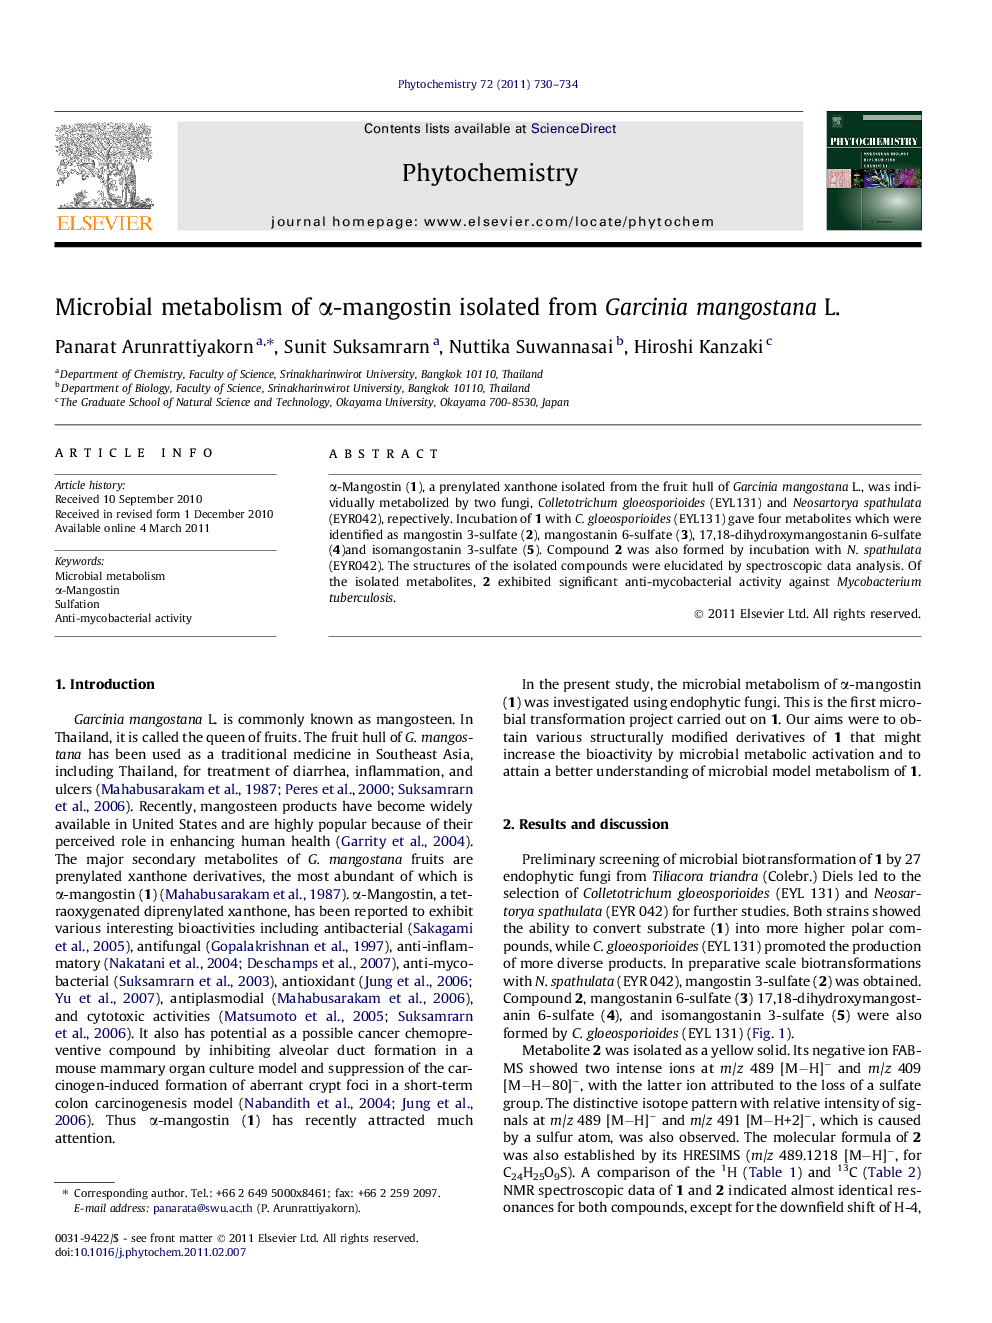 Microbial metabolism of Î±-mangostin isolated from Garcinia mangostana L.